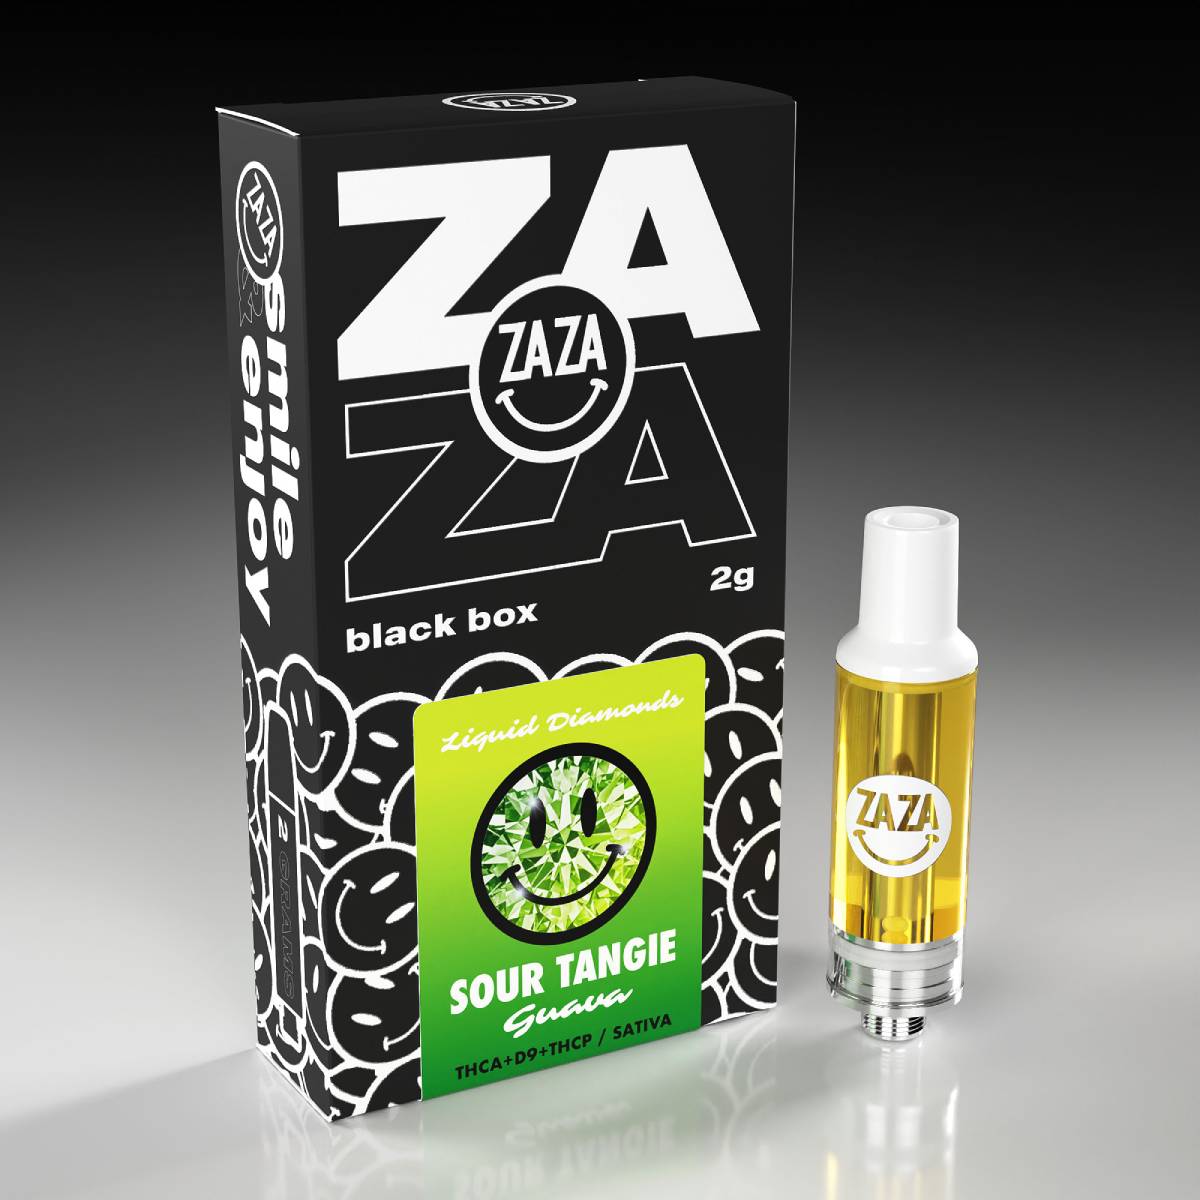 Zaza Black Box Liquid Diamonds Cartridges 2g Best Price